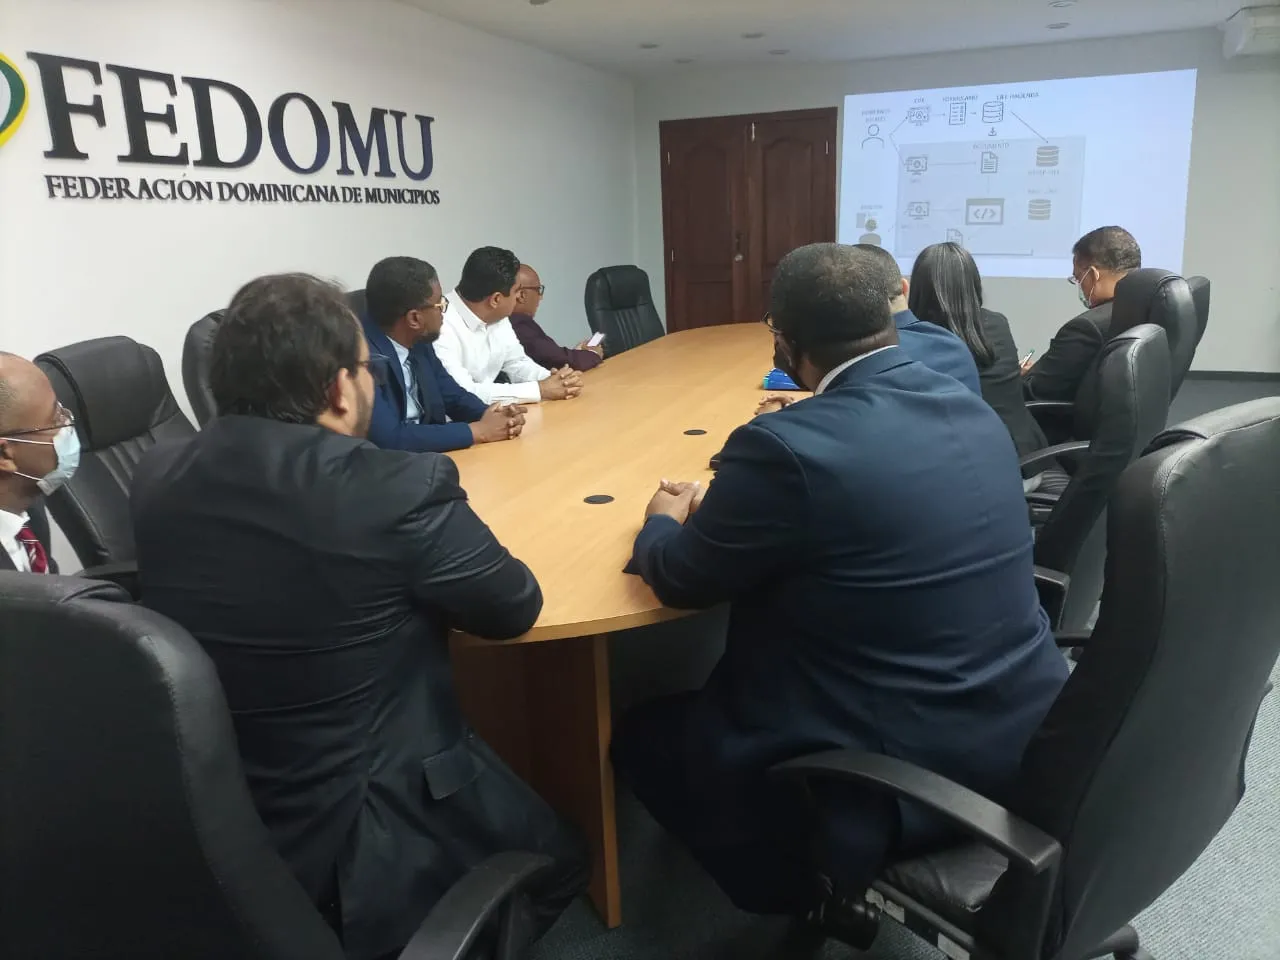 Presentan a Fedomu plataforma digital para gobiernos locales